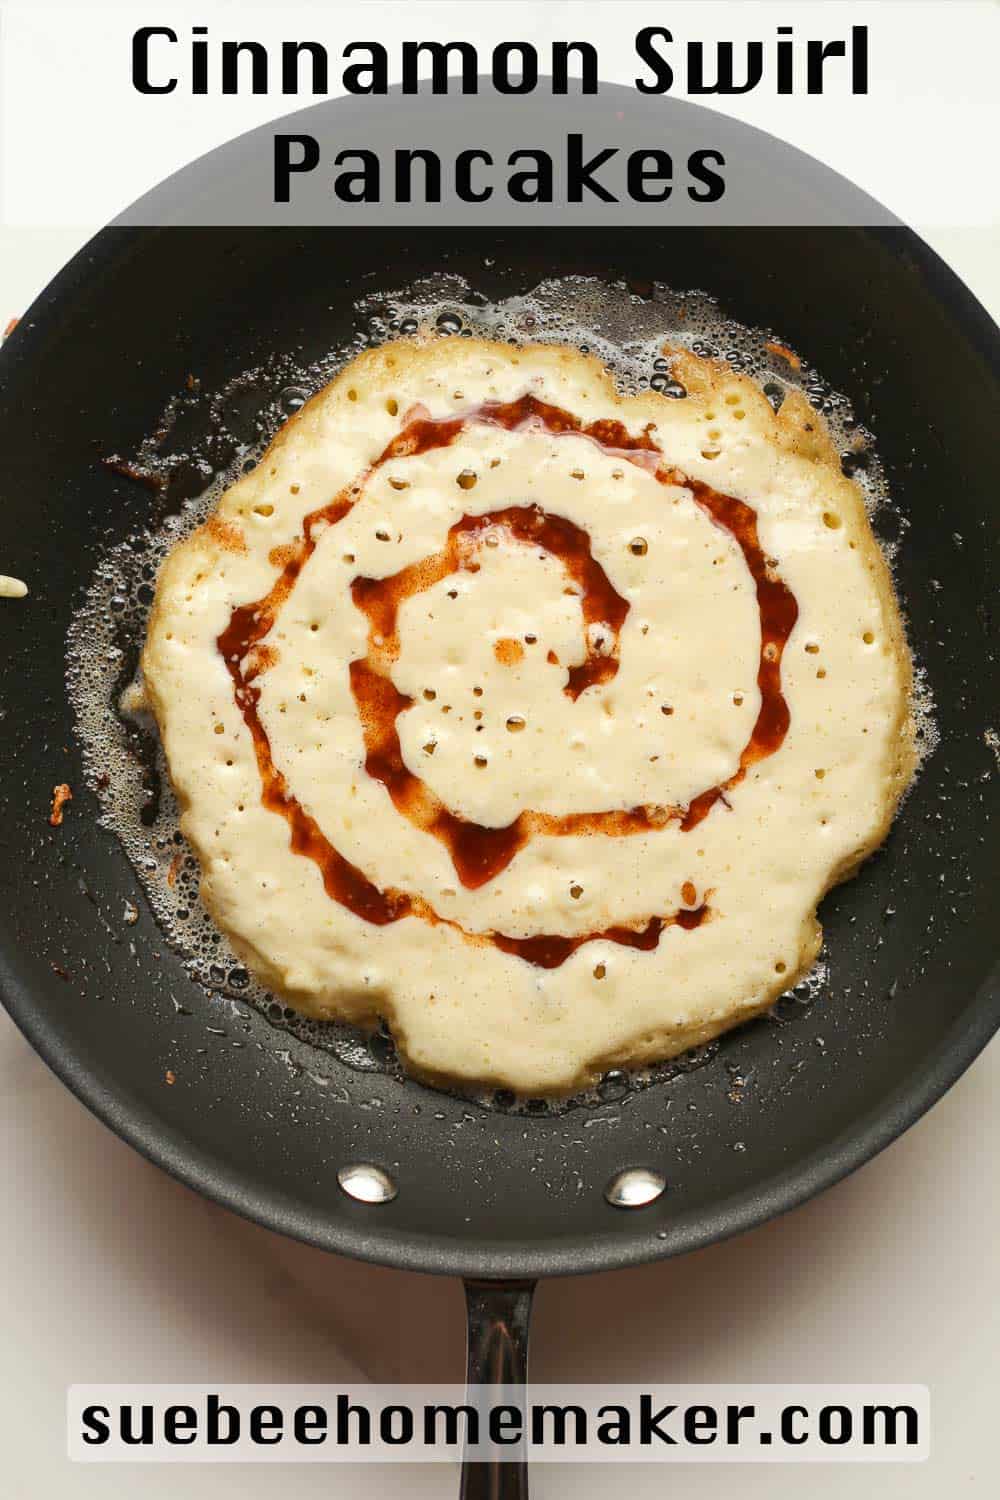 A pan with a cinnamon swirl pancake.